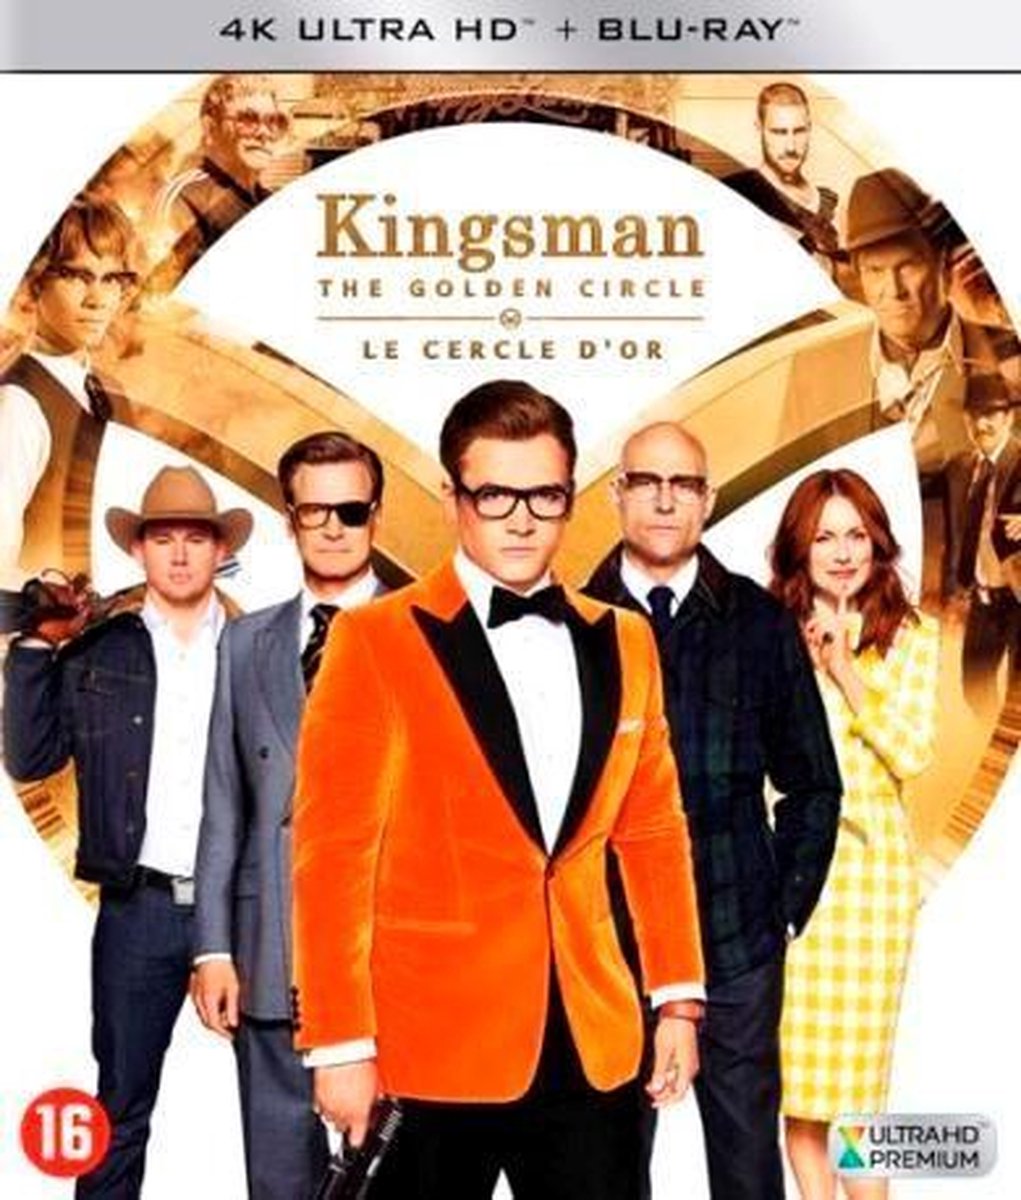 Kingsman - The Golden Circle (4K Ultra HD Blu-ray) - Disney Movies